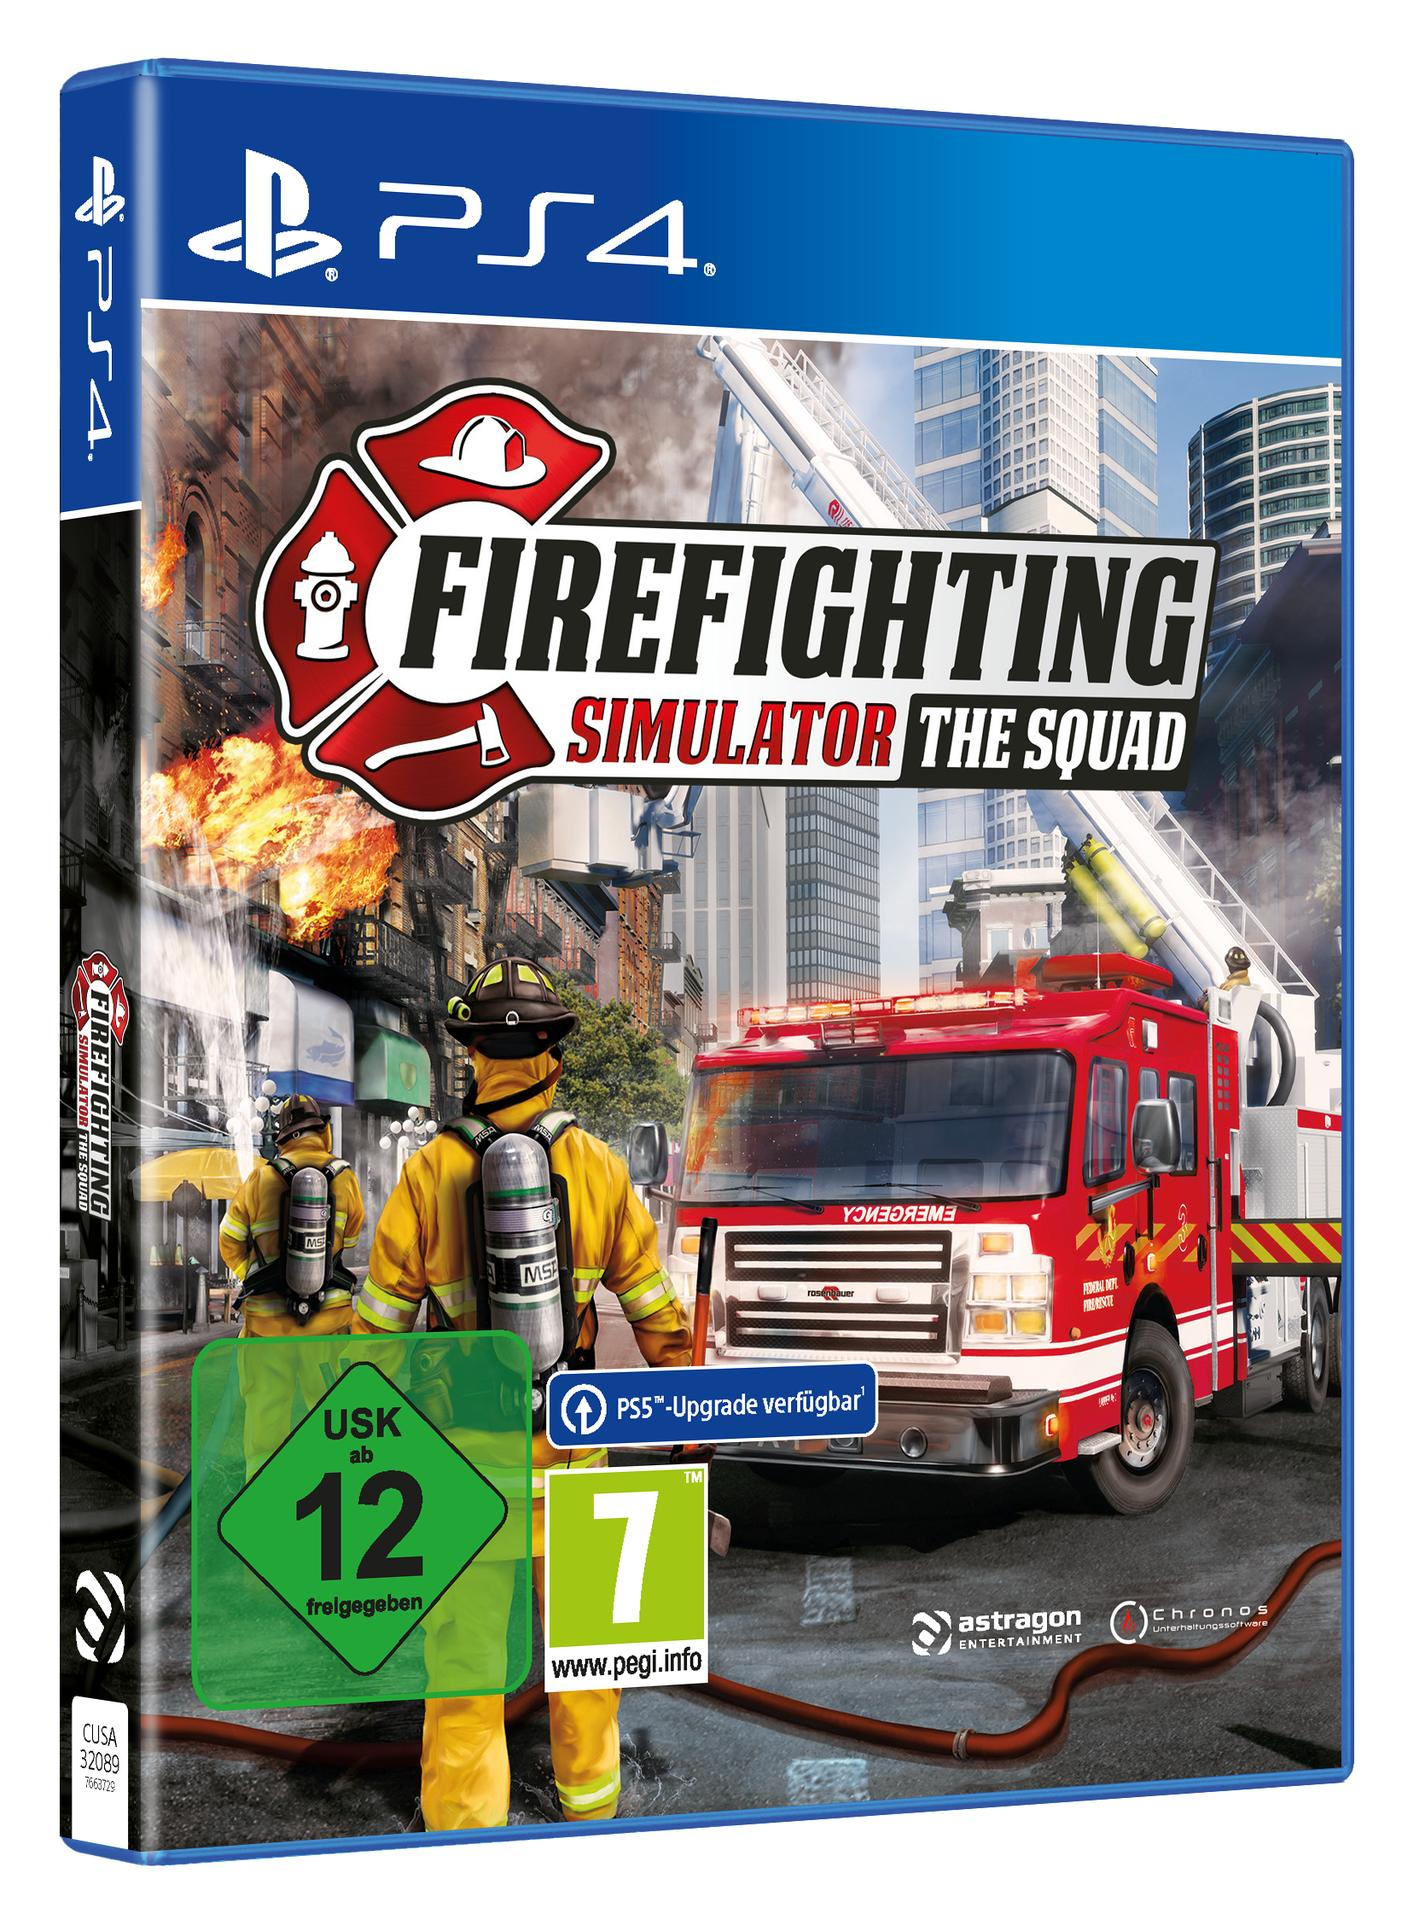 [PlayStation 4] The Squad - Firefighting Simulator: